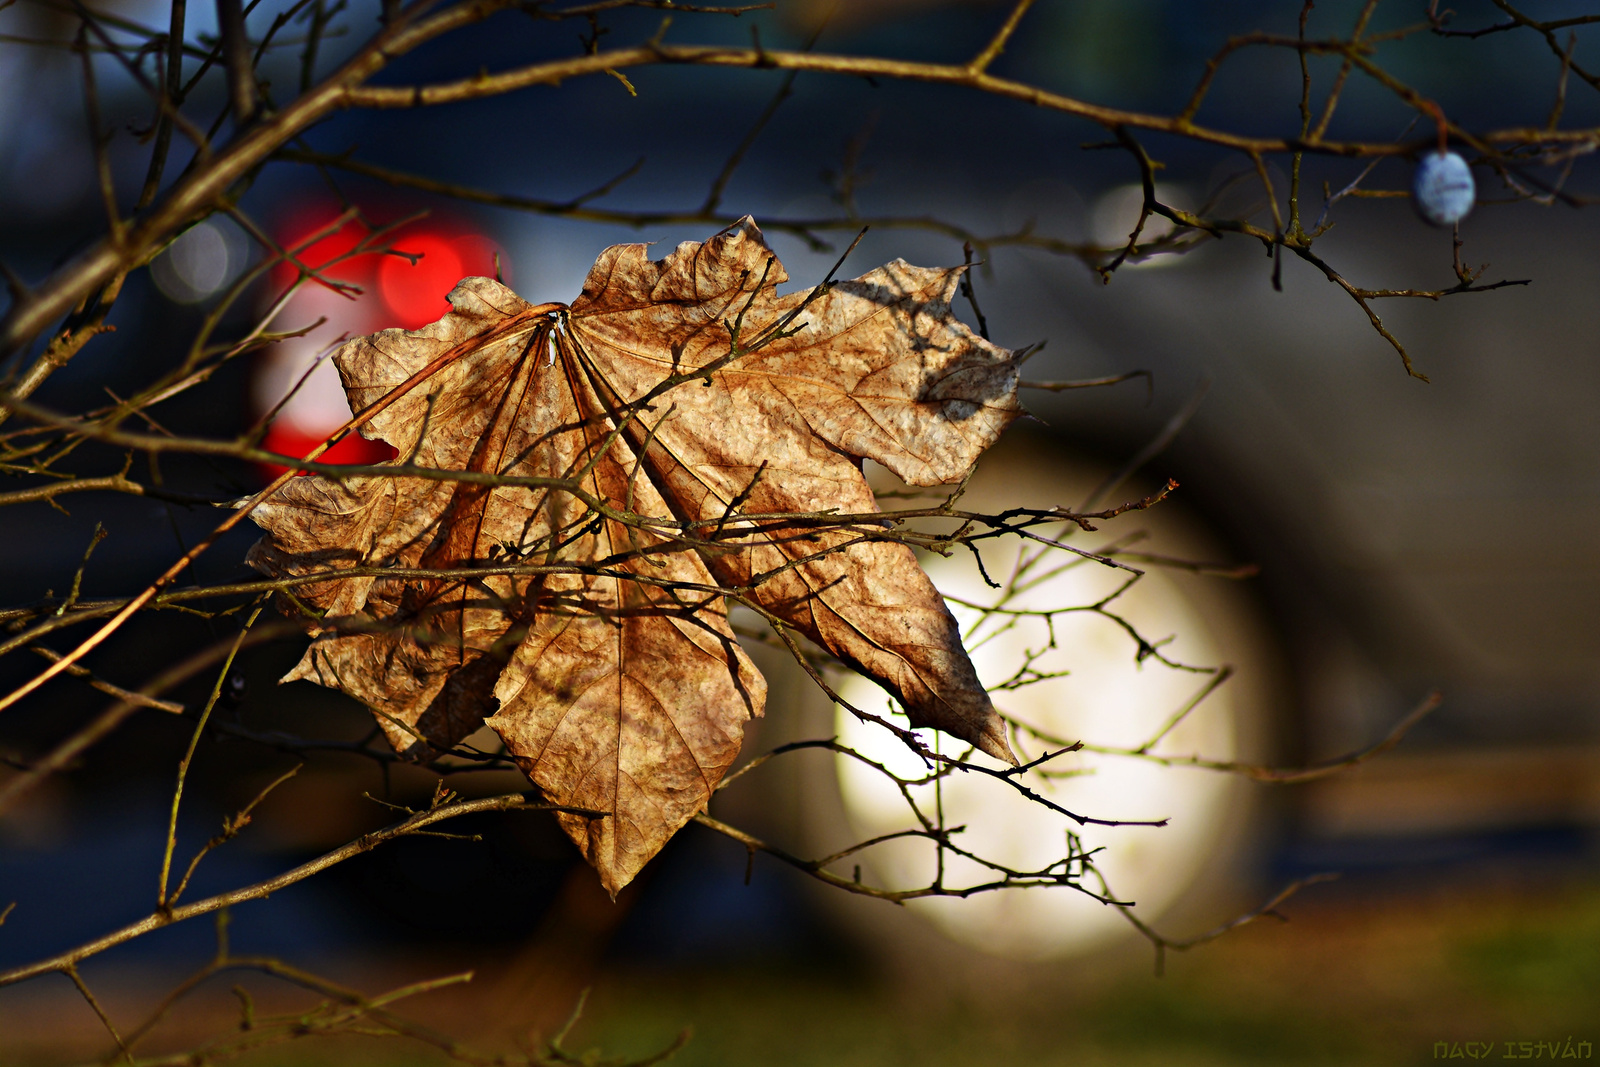 Leaves by car